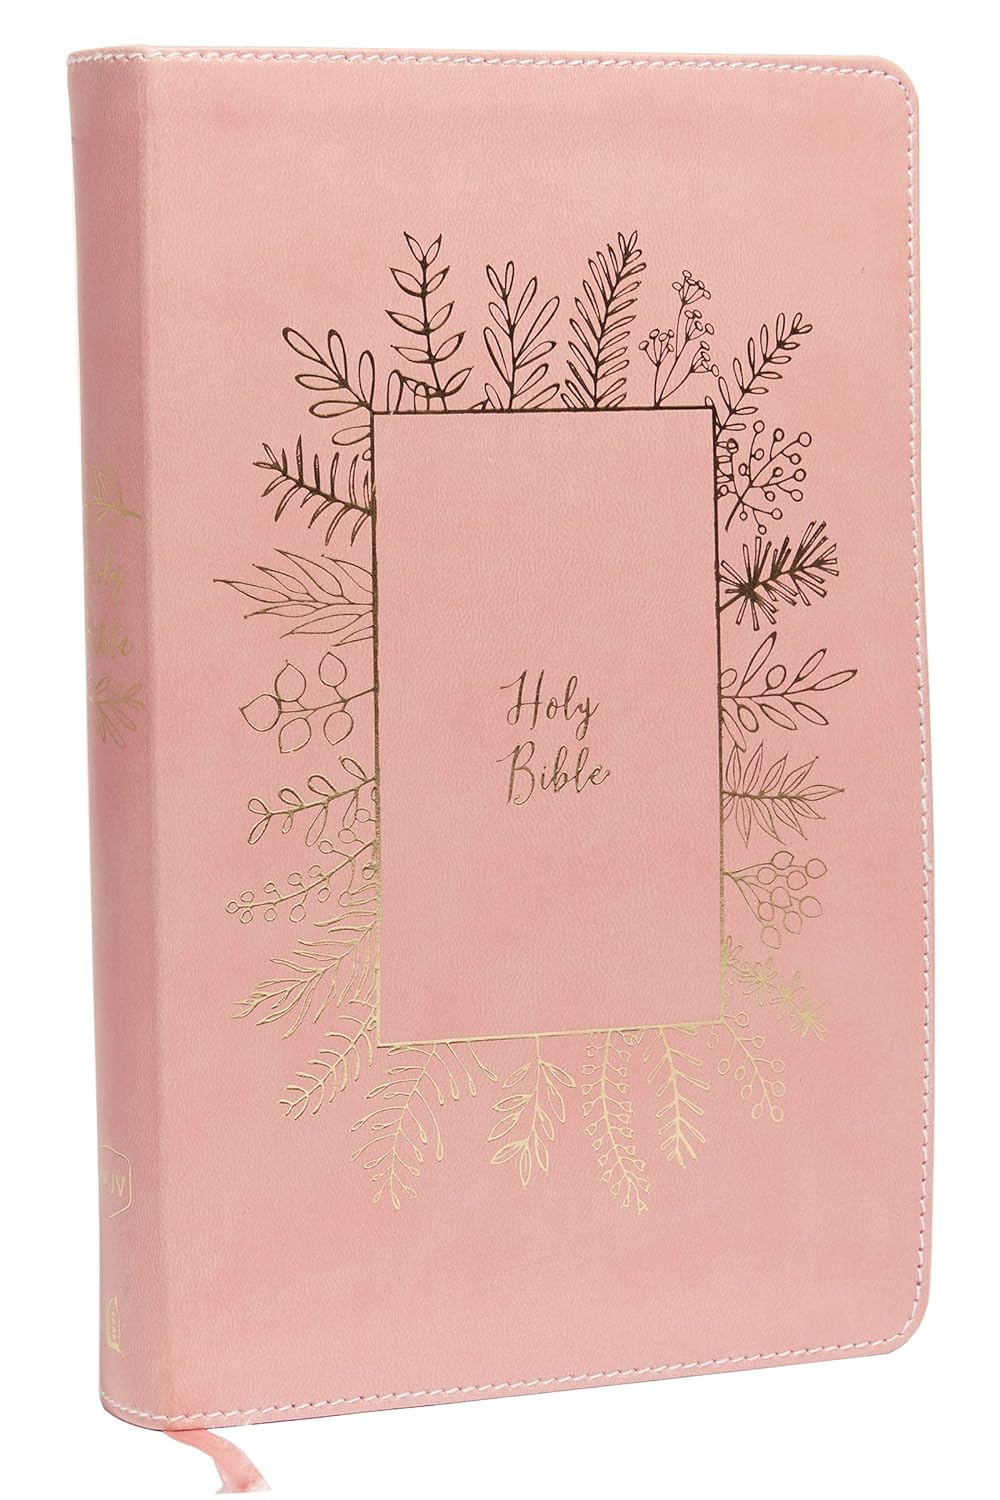 NKJV Holy Bible for Kids, Leathersoft, Comfort Print, Pink